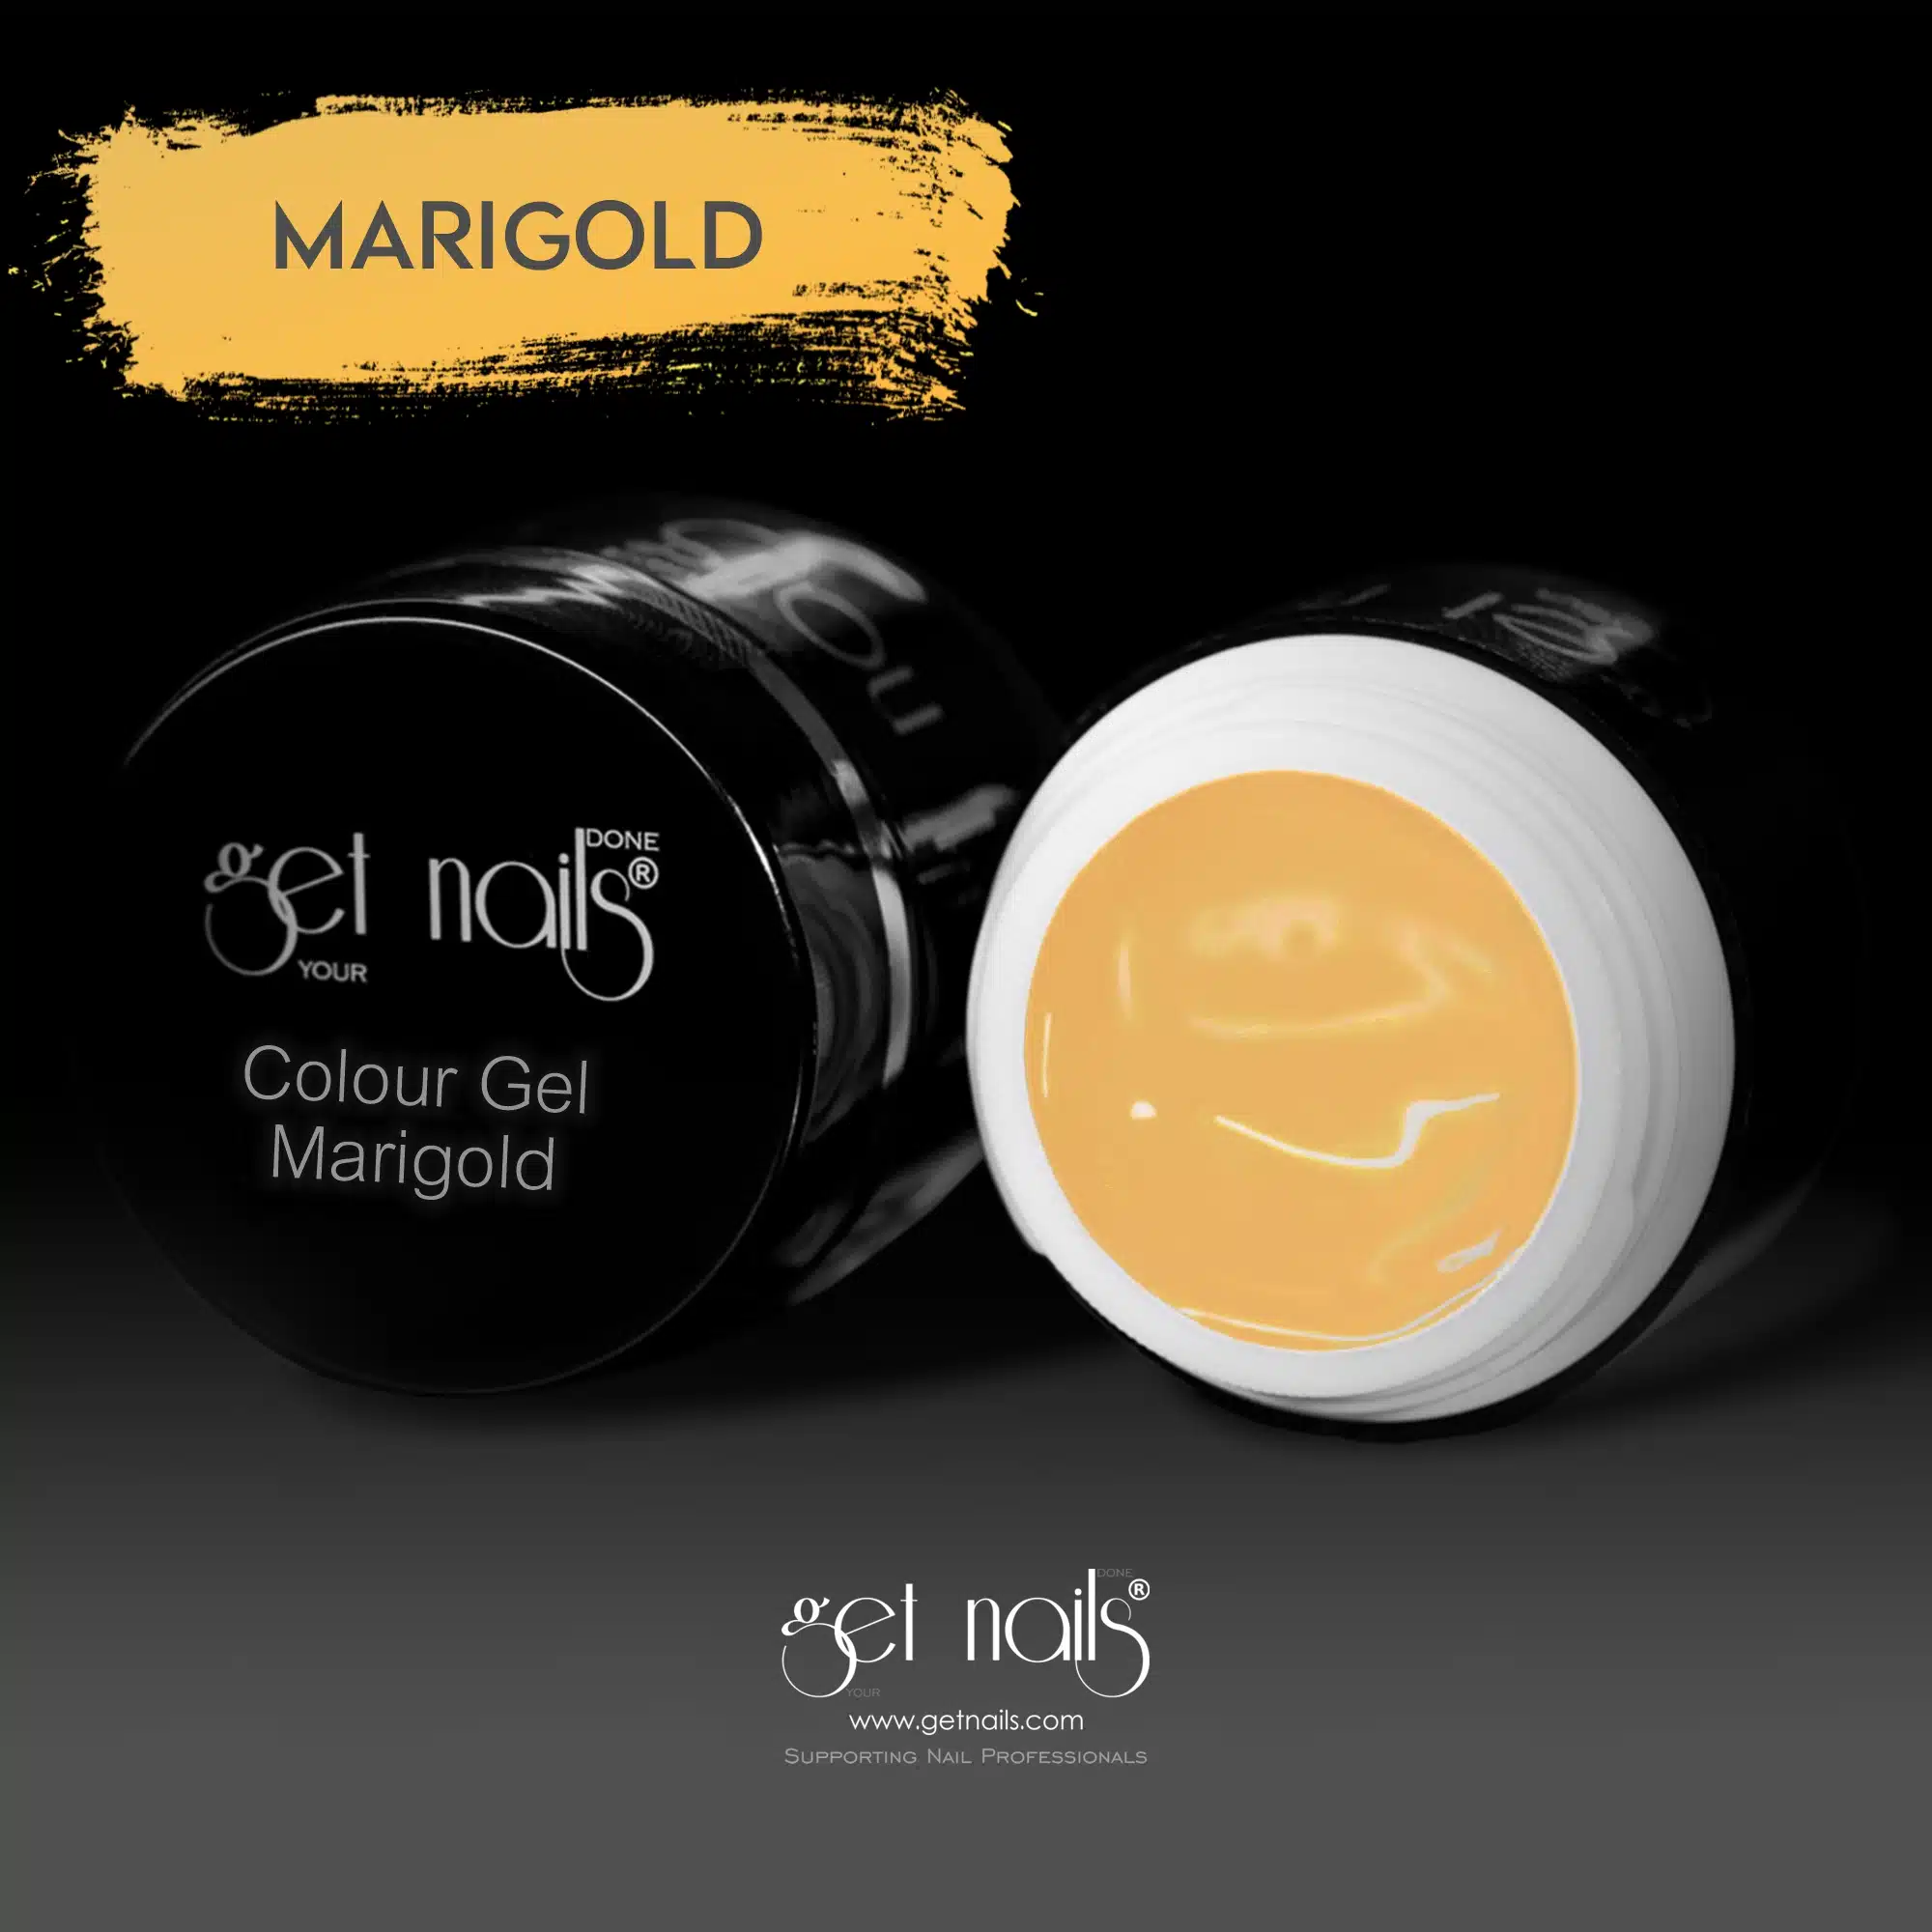 Get Nails Austria - Colour Gel Marigold 5g